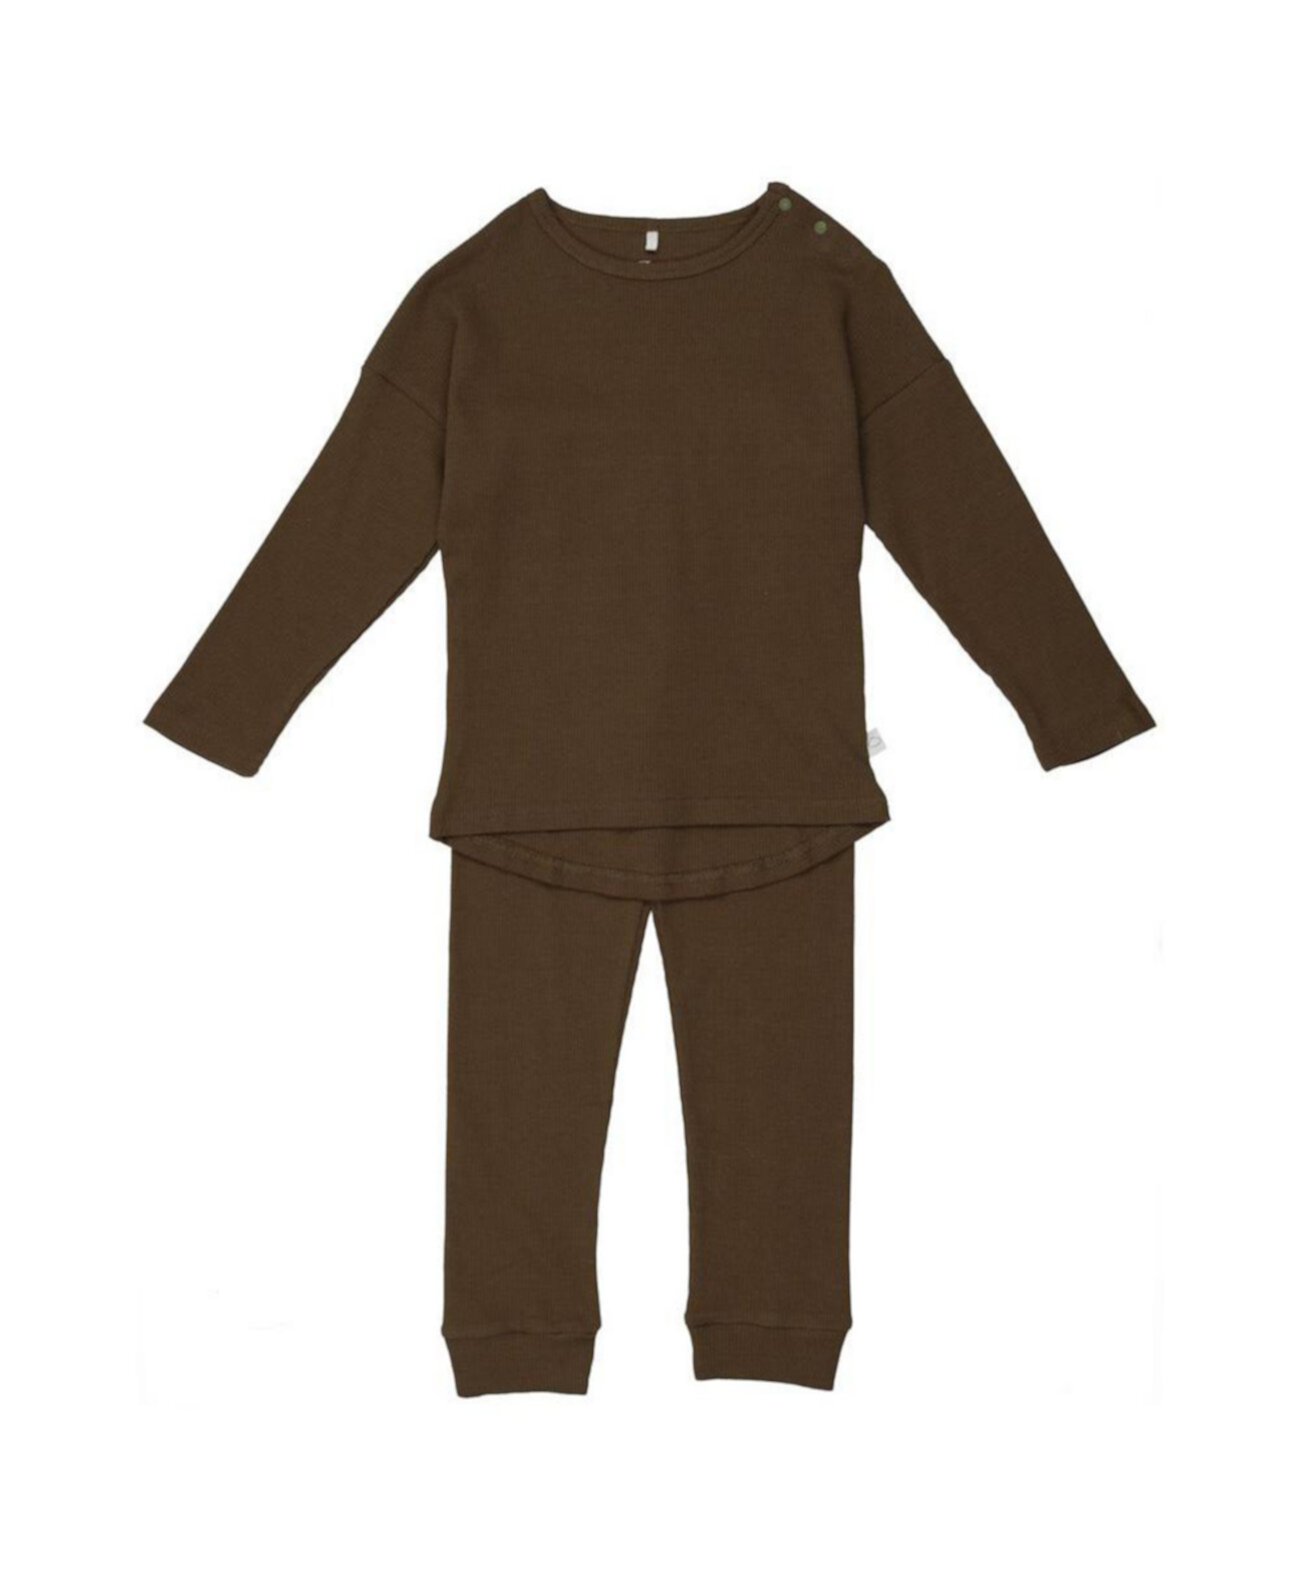 Unisex Waffle Knit Shirt and Pants Set, Toddler To Child Pouf